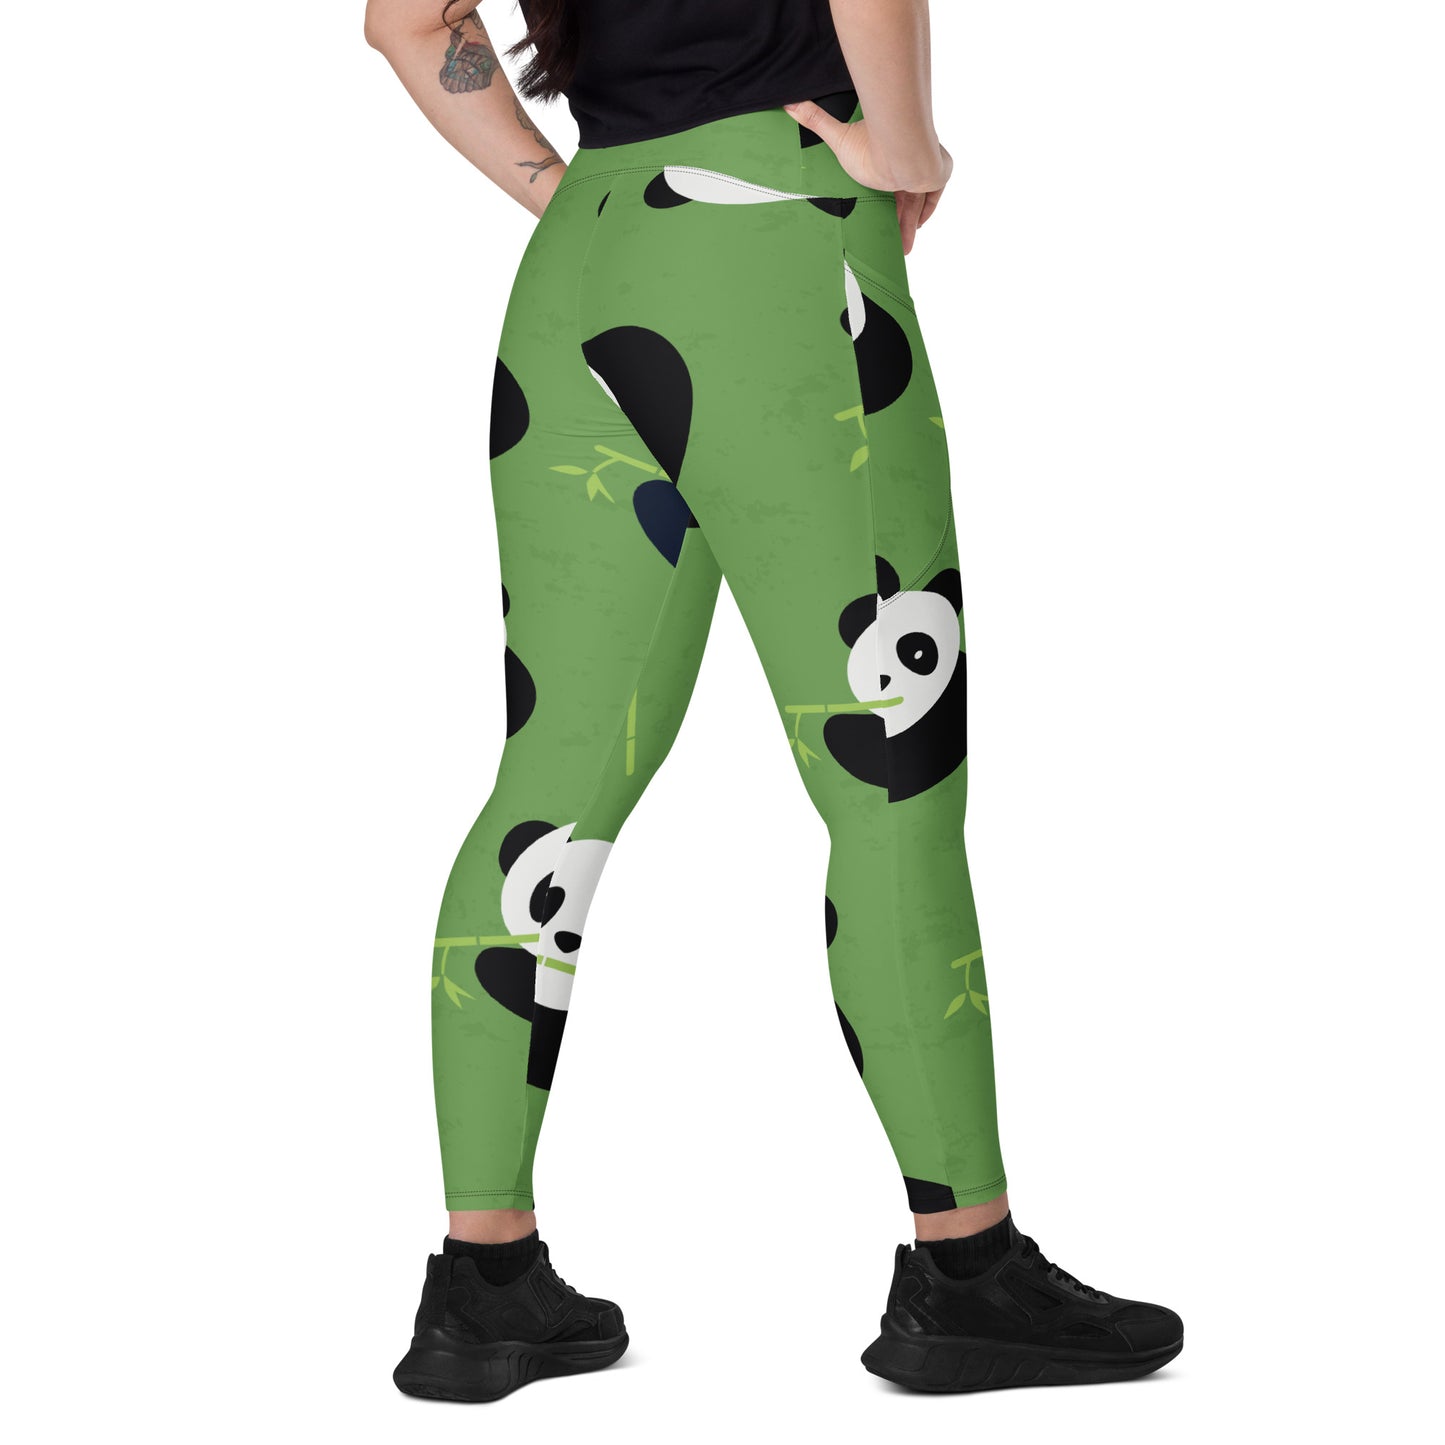 PandaPwr Panda Leggings with pockets